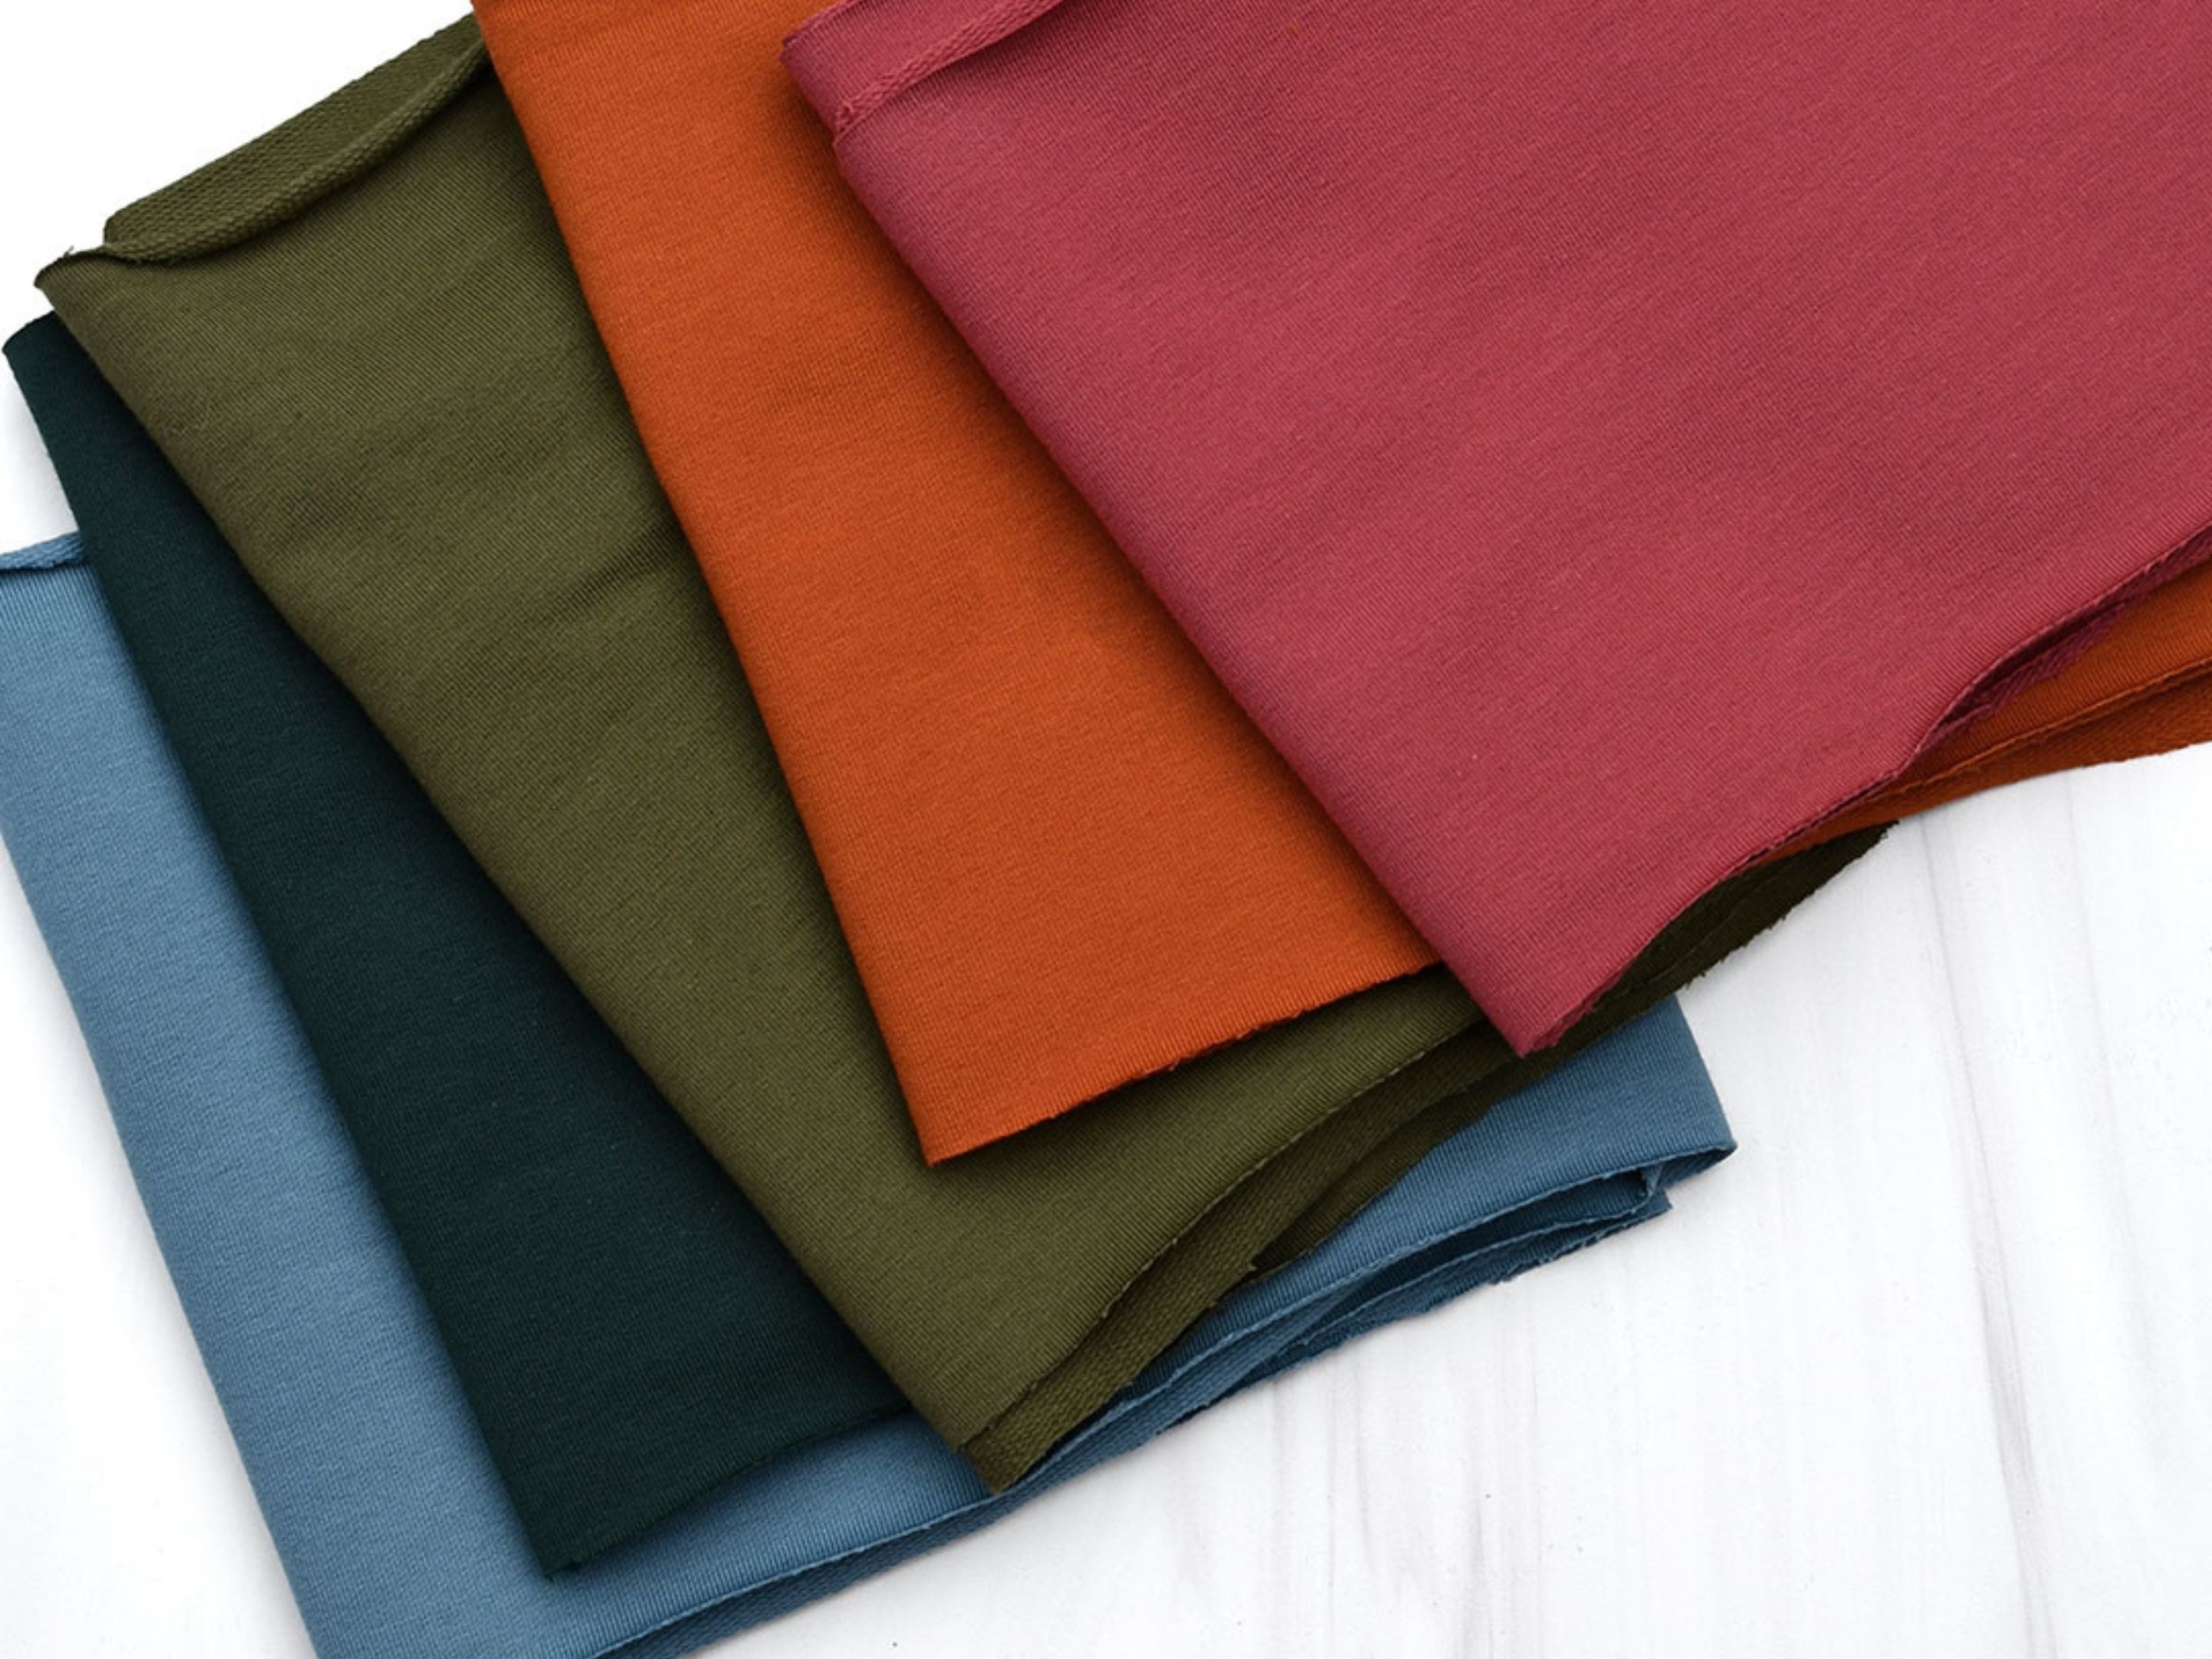 Hot Pink Polyester/Spandex Rib Knit Fabric - 2x2 – Nature's Fabrics